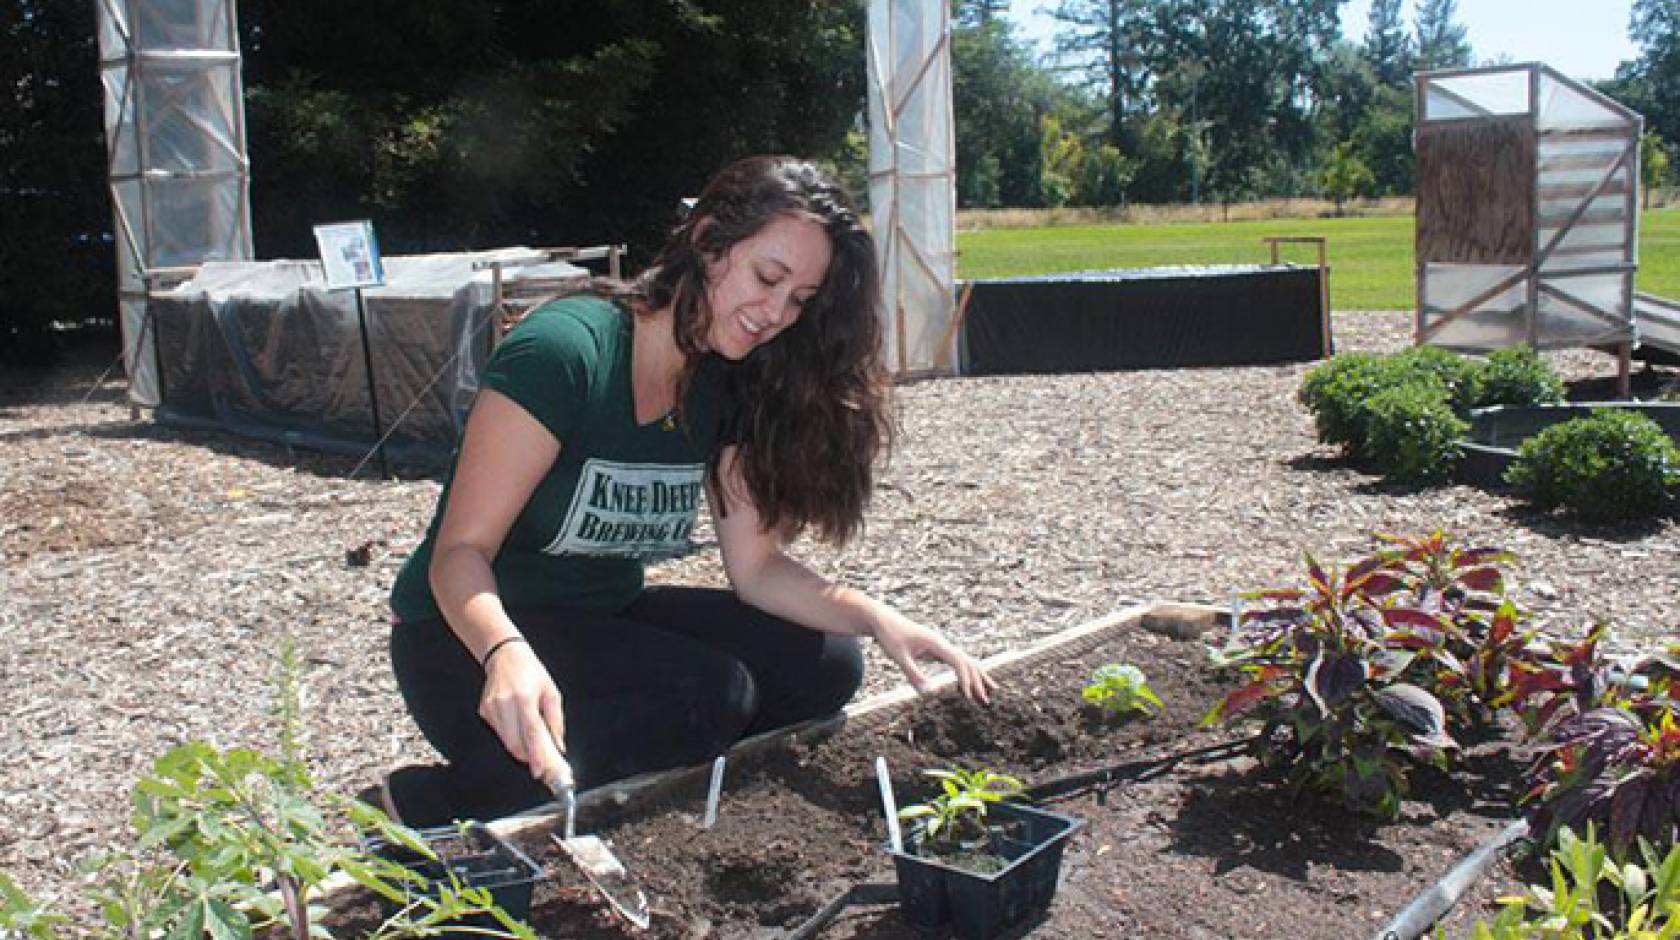 Elise Brockett, student assistant, plants African vegetable seedlings at the Horticulture Innovation Lab Demonstration Center at UC Davis.